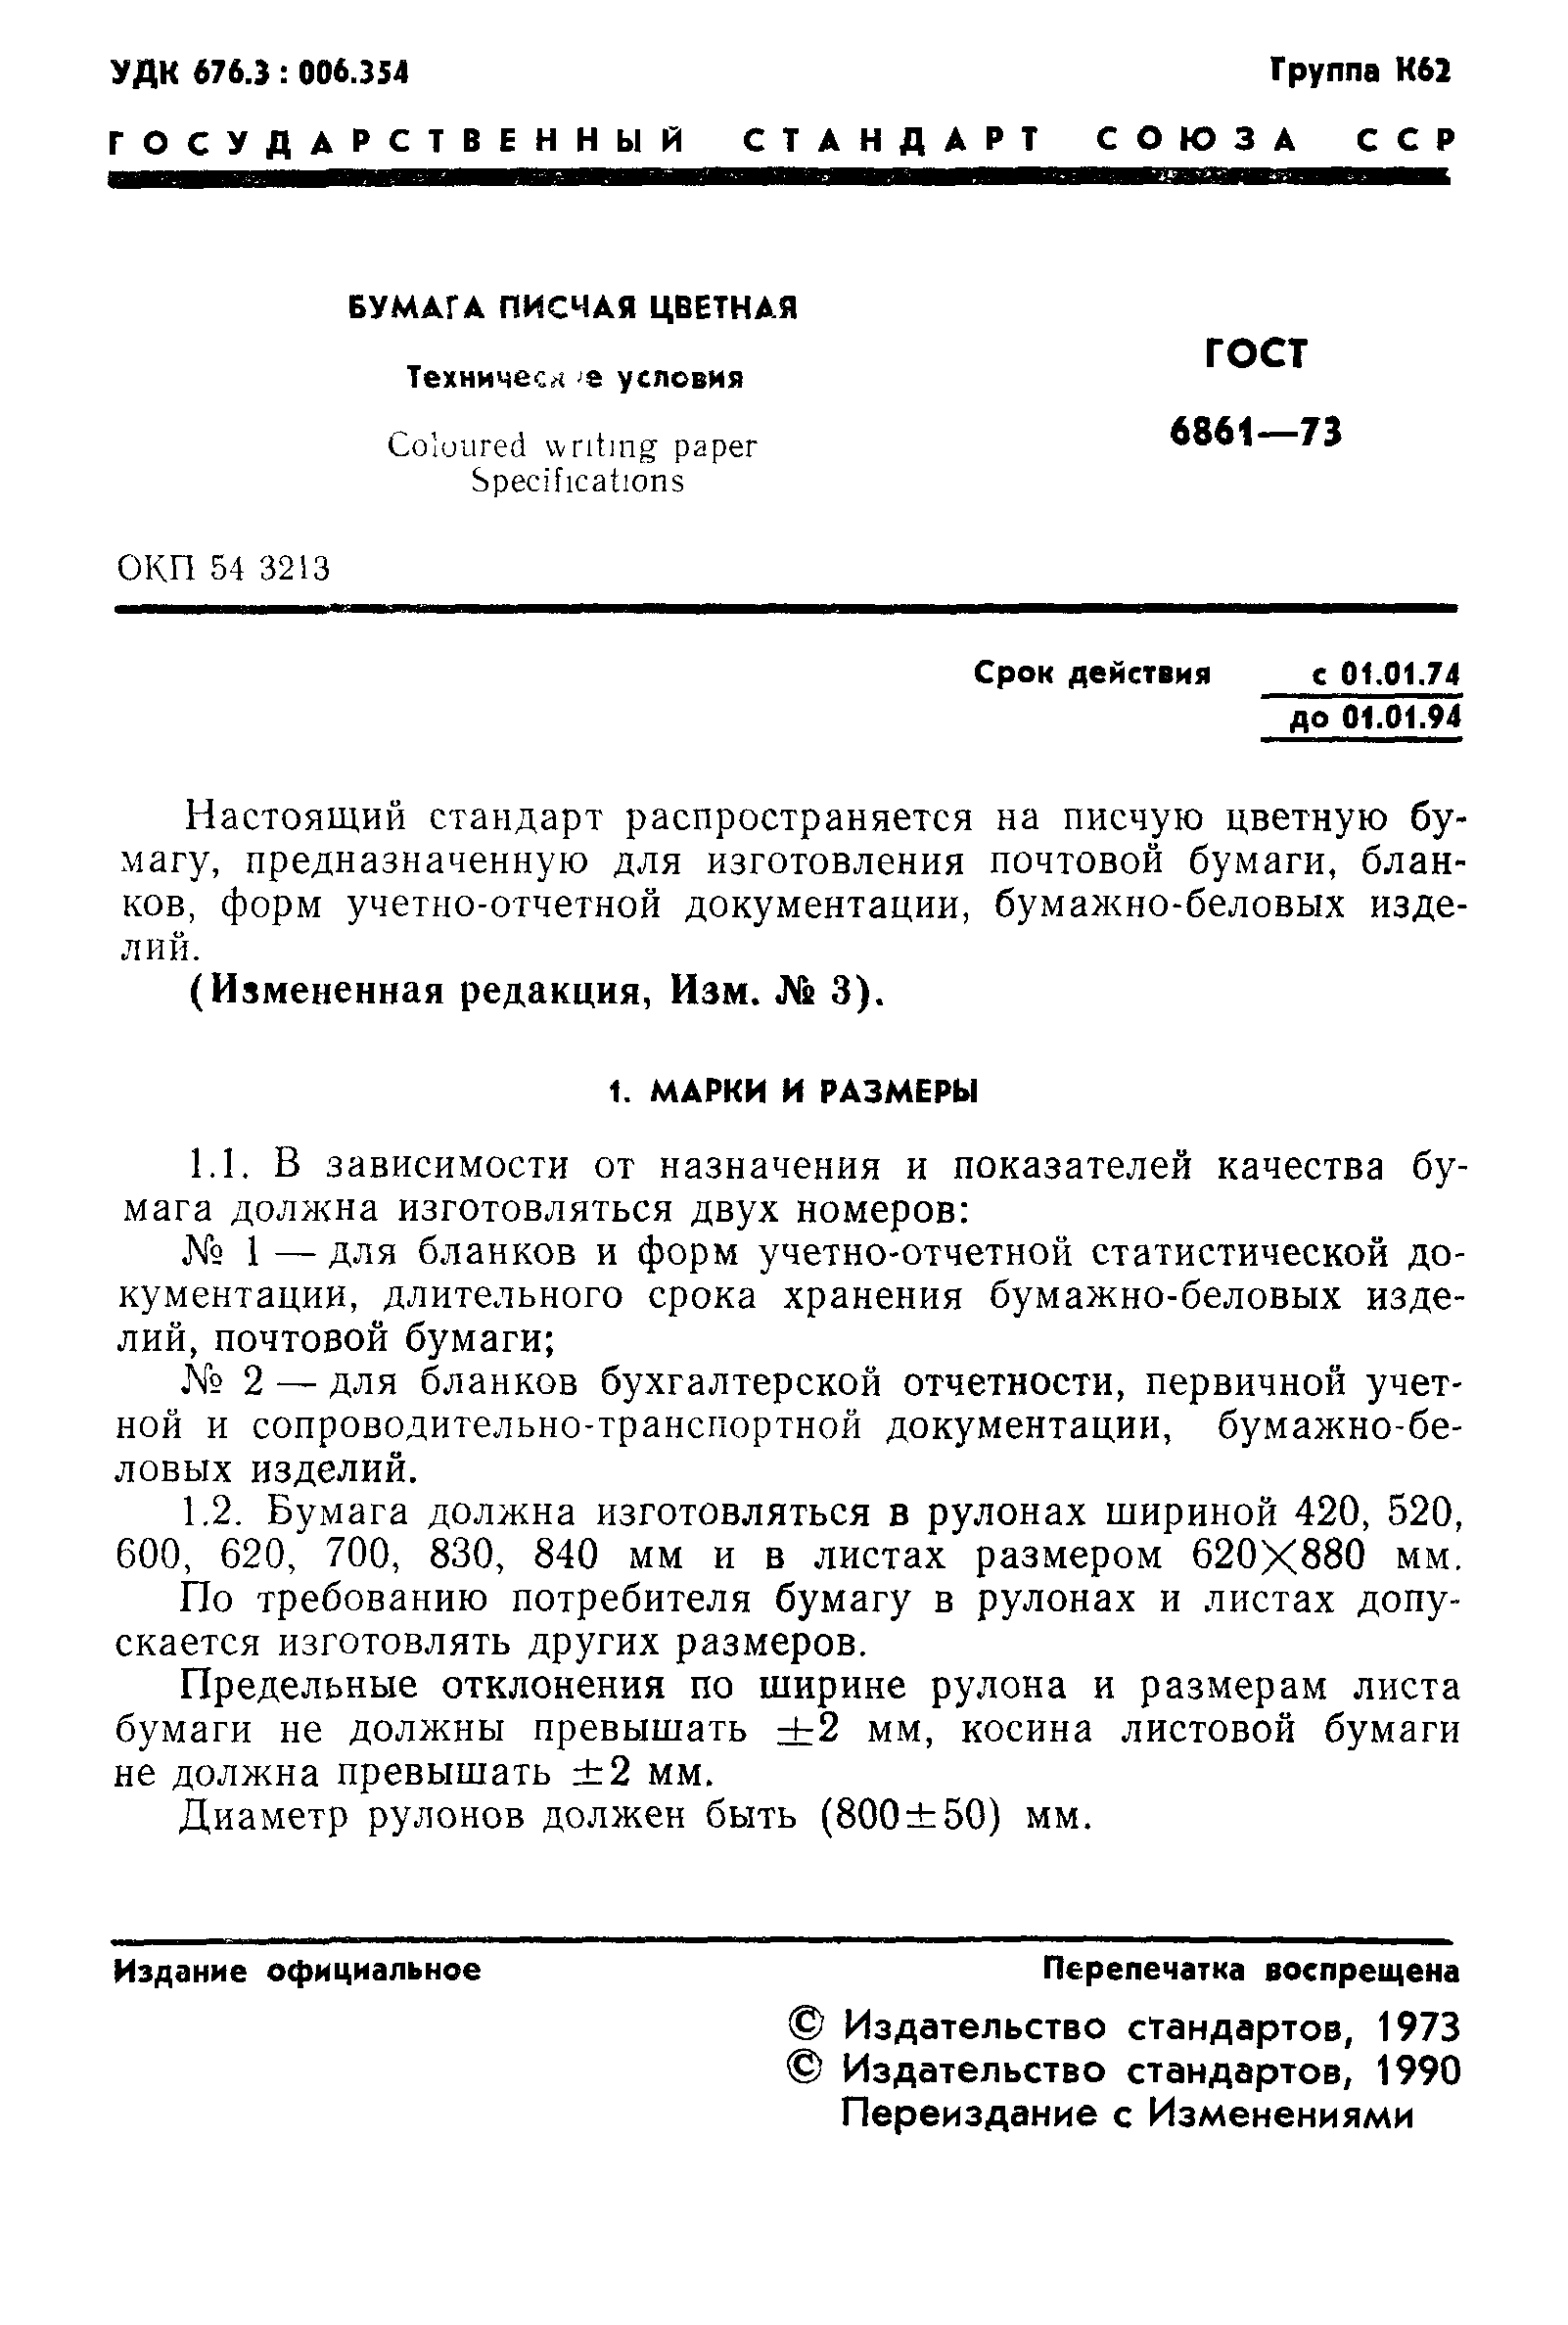 ГОСТ 6861-73